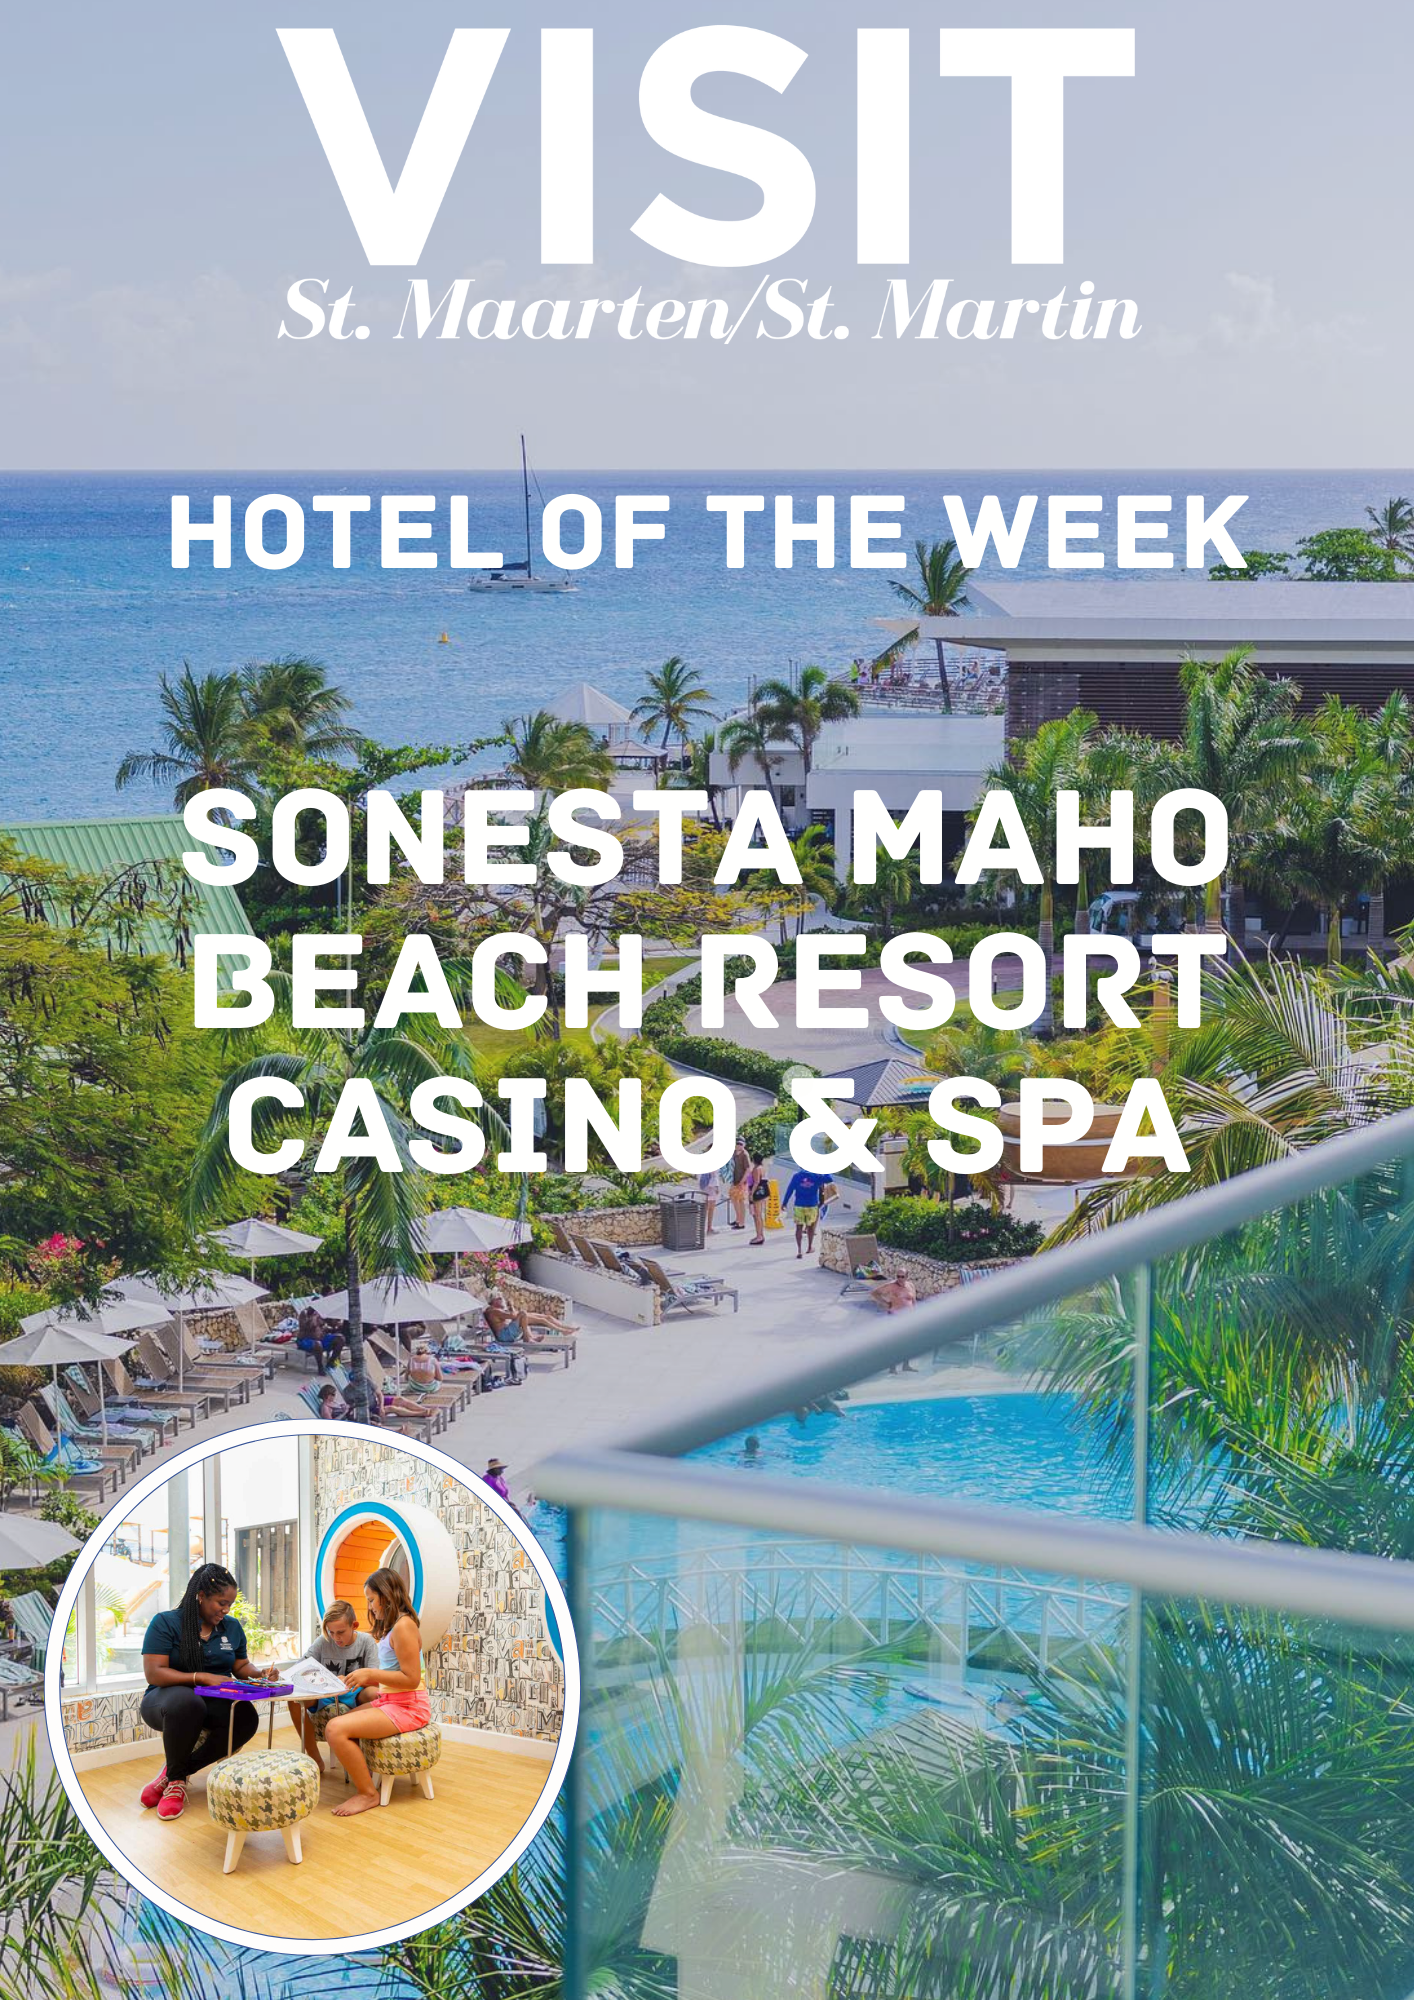 Sonesta Maho Beach Resort an all inclusive resort on St. Maarten